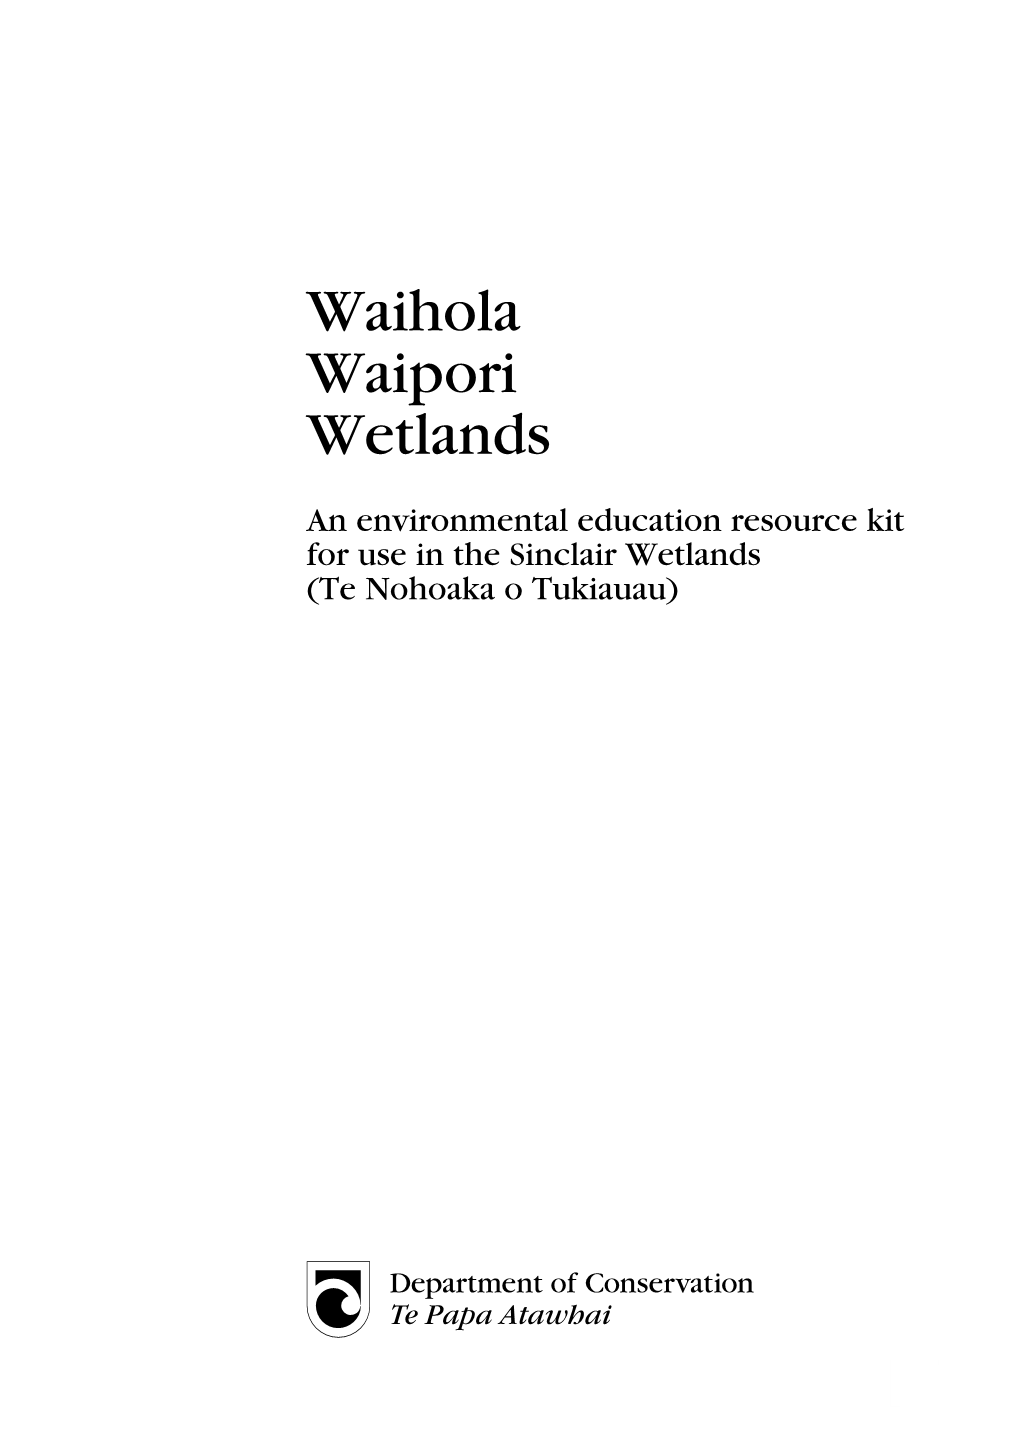 Waihola Waipori Wetlands